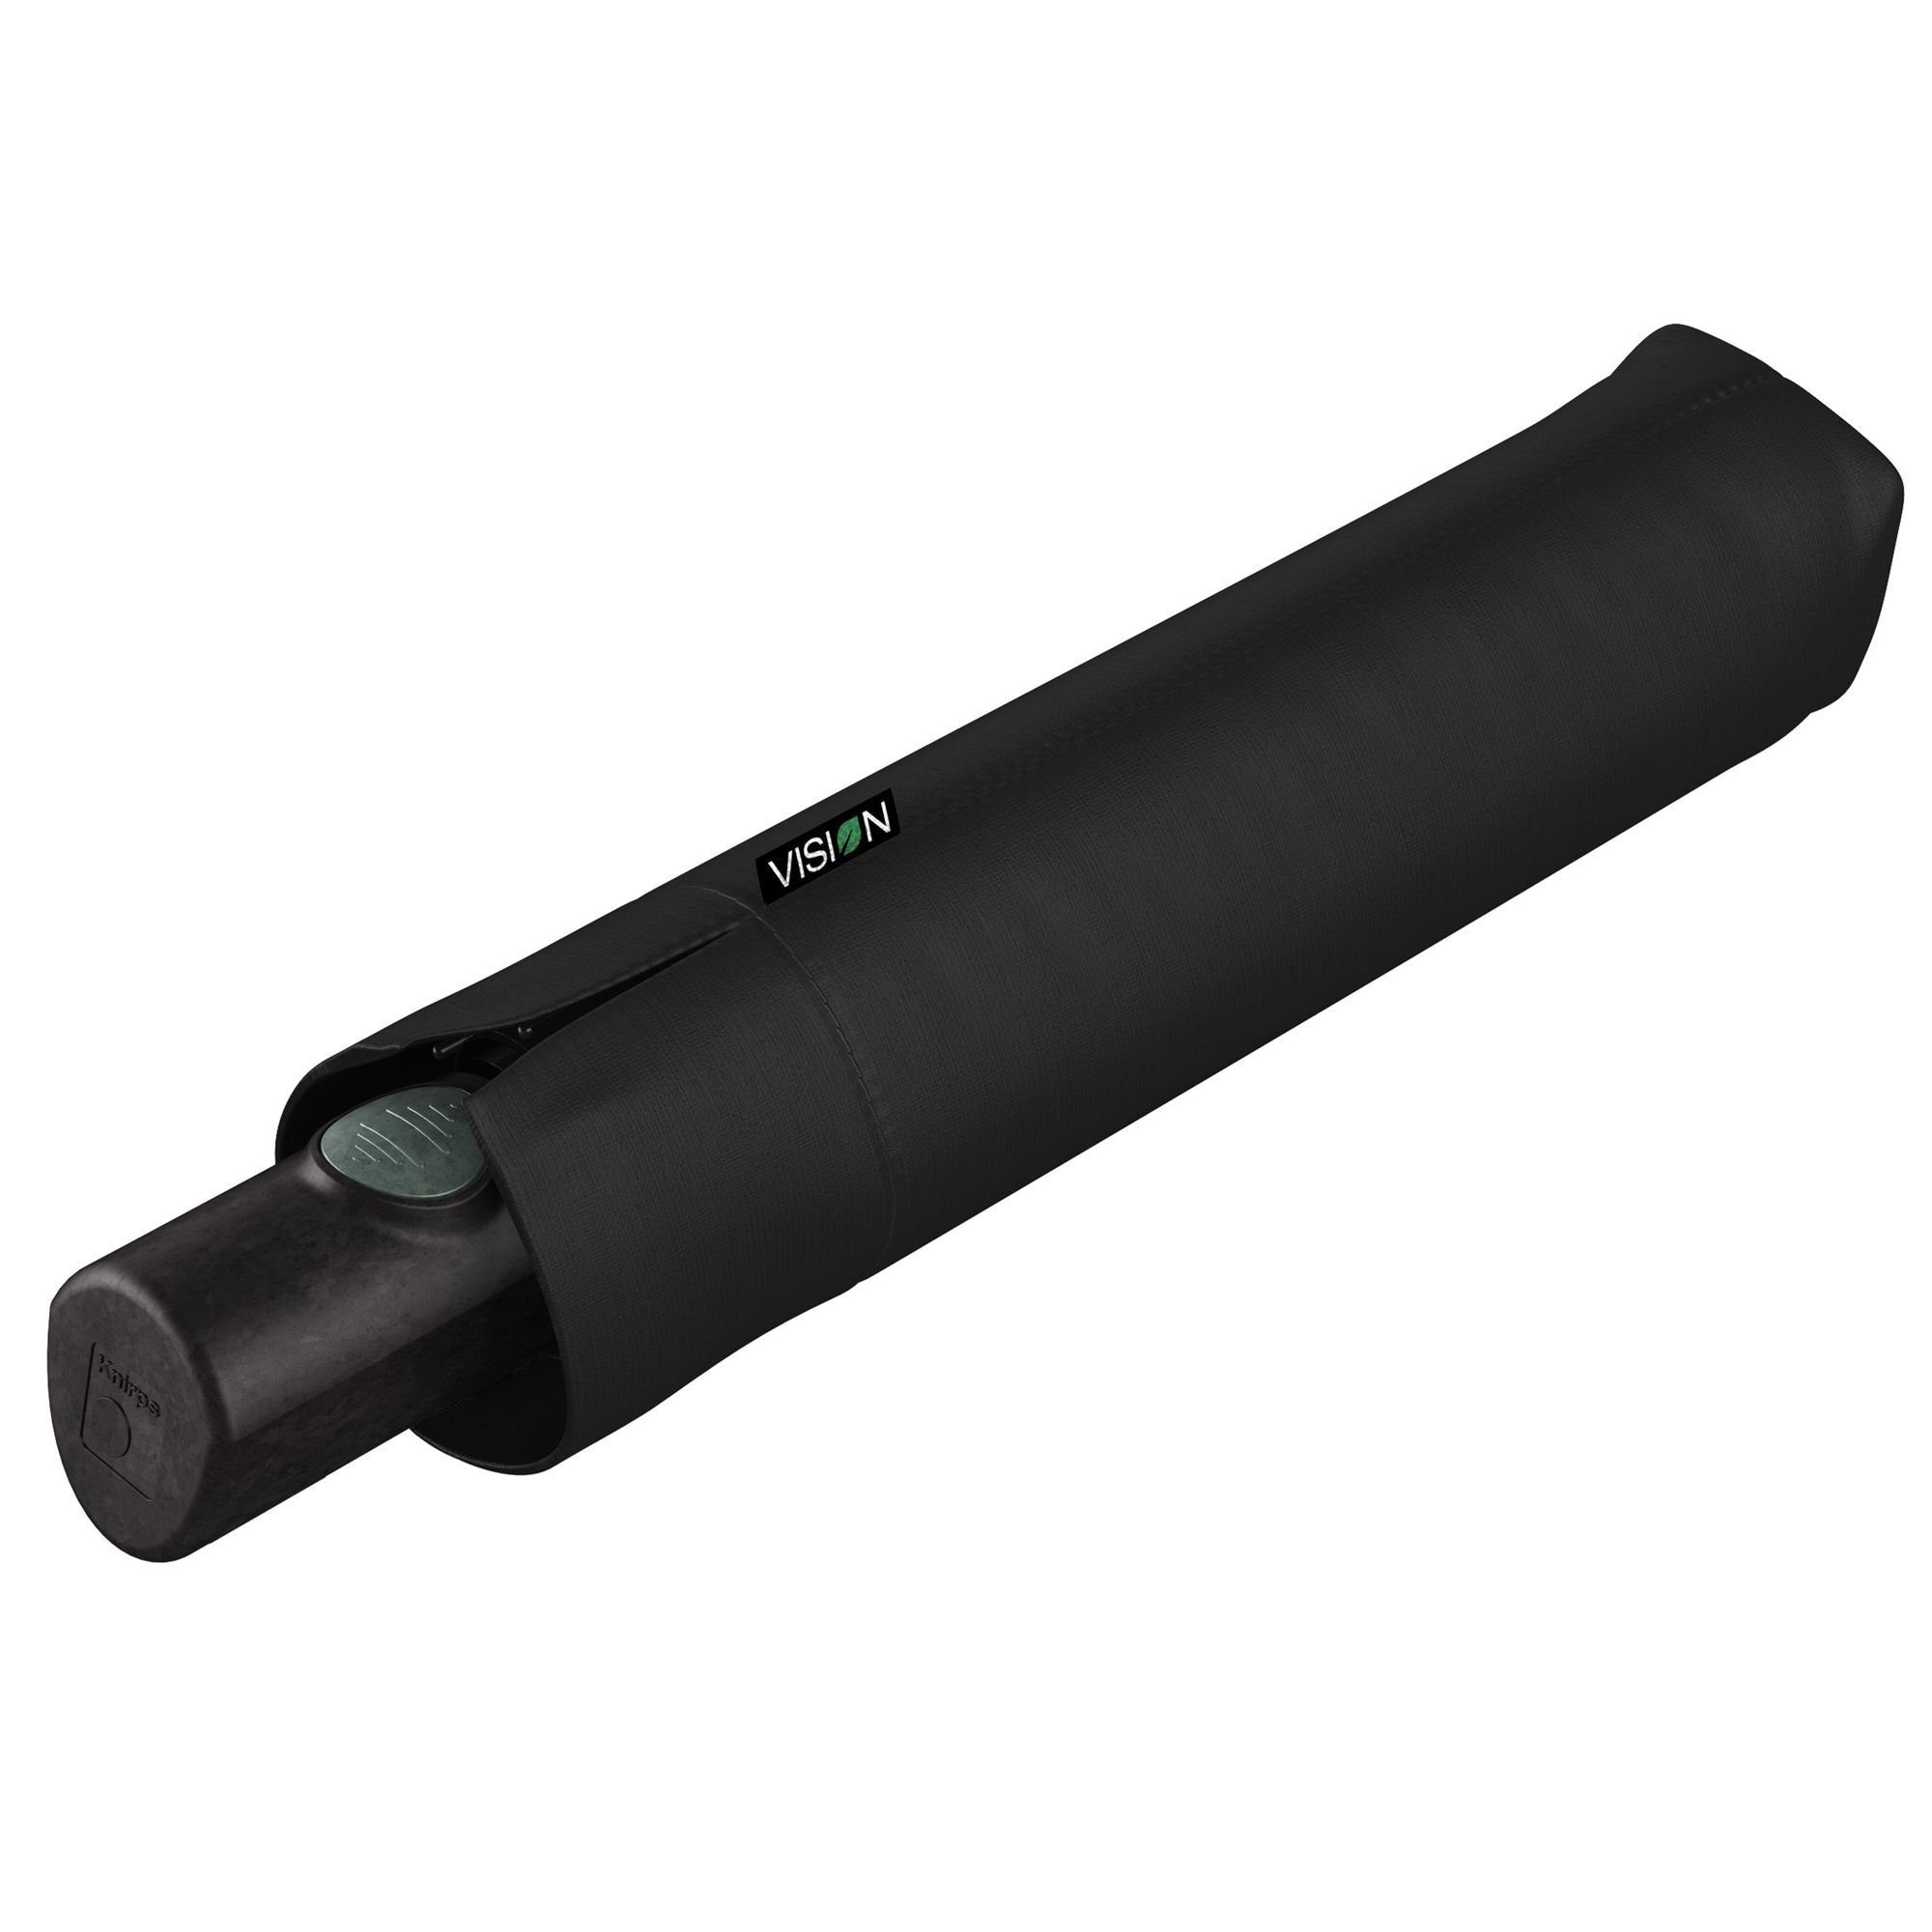 Taschenregenschirm Duomatic Vision Knirps® box in paper black